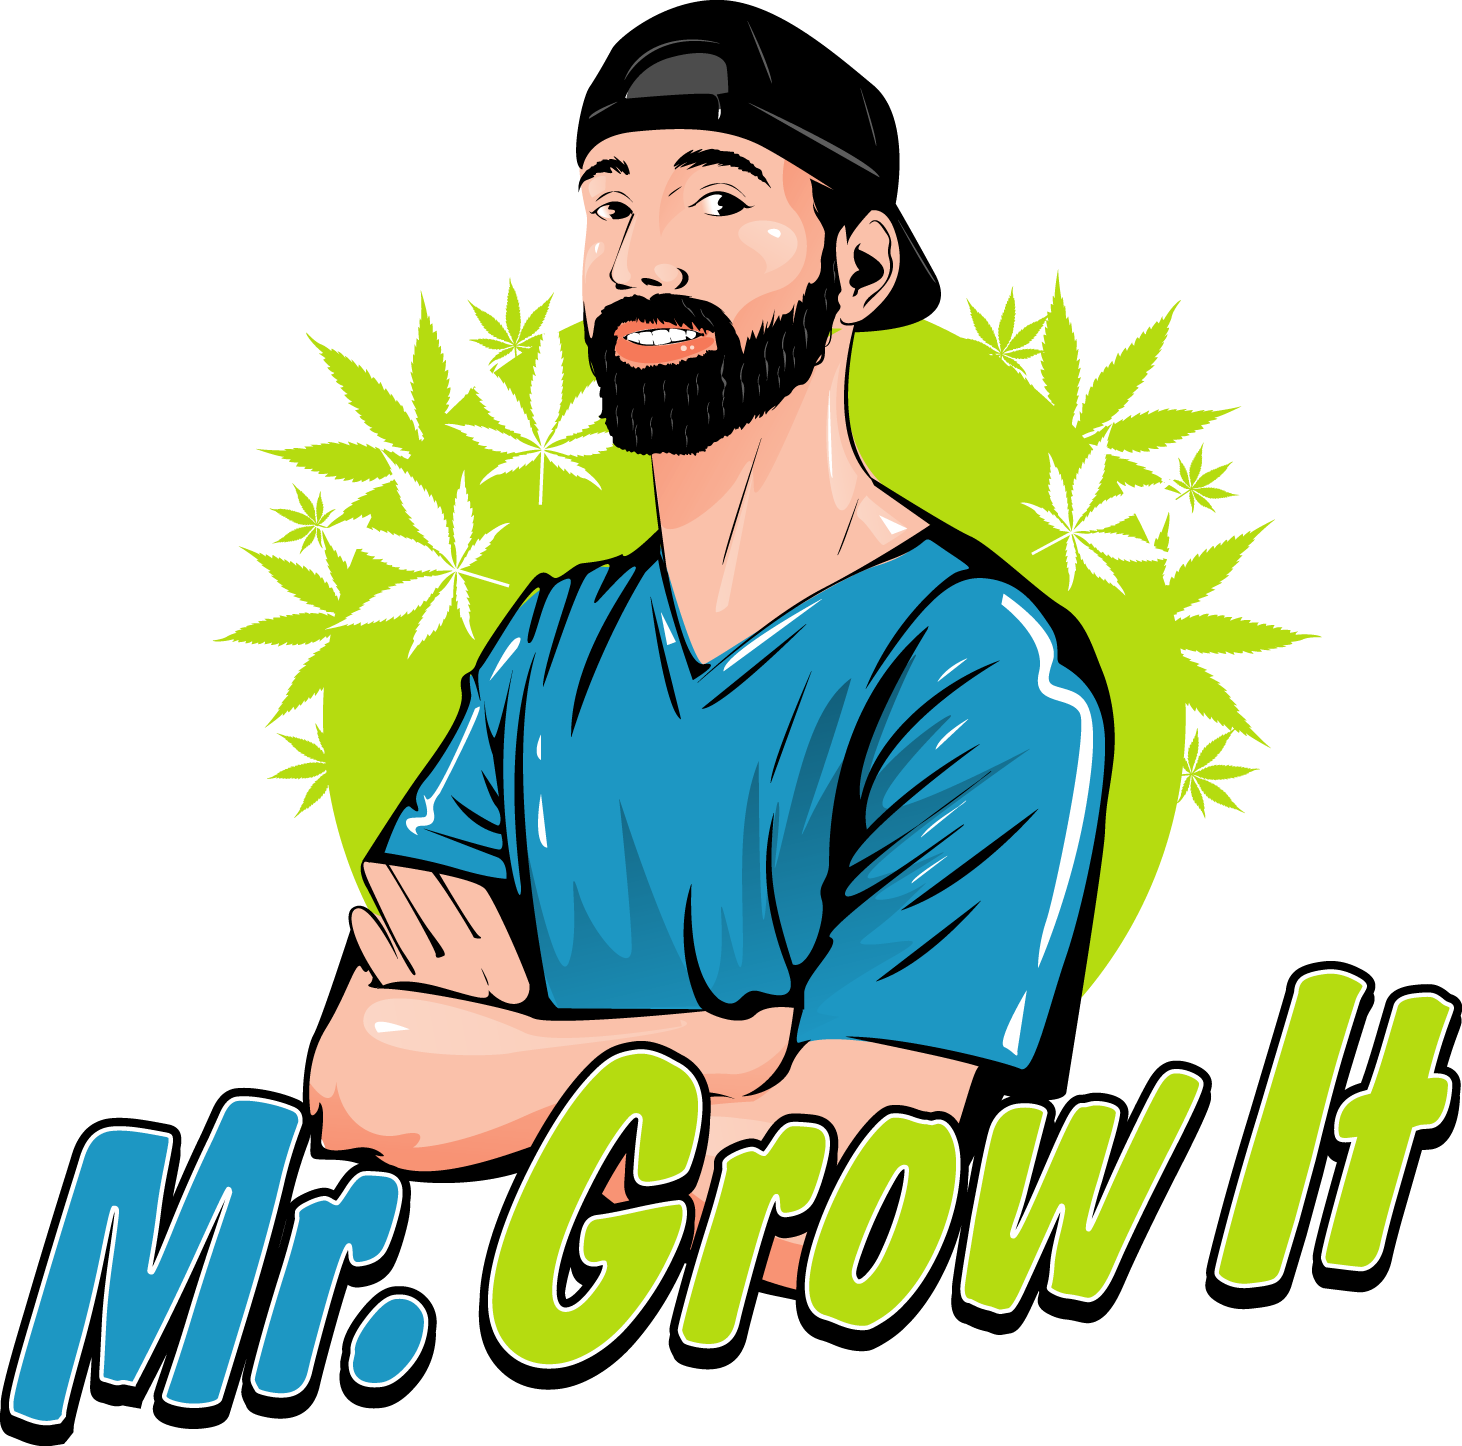 Mr. Grow It